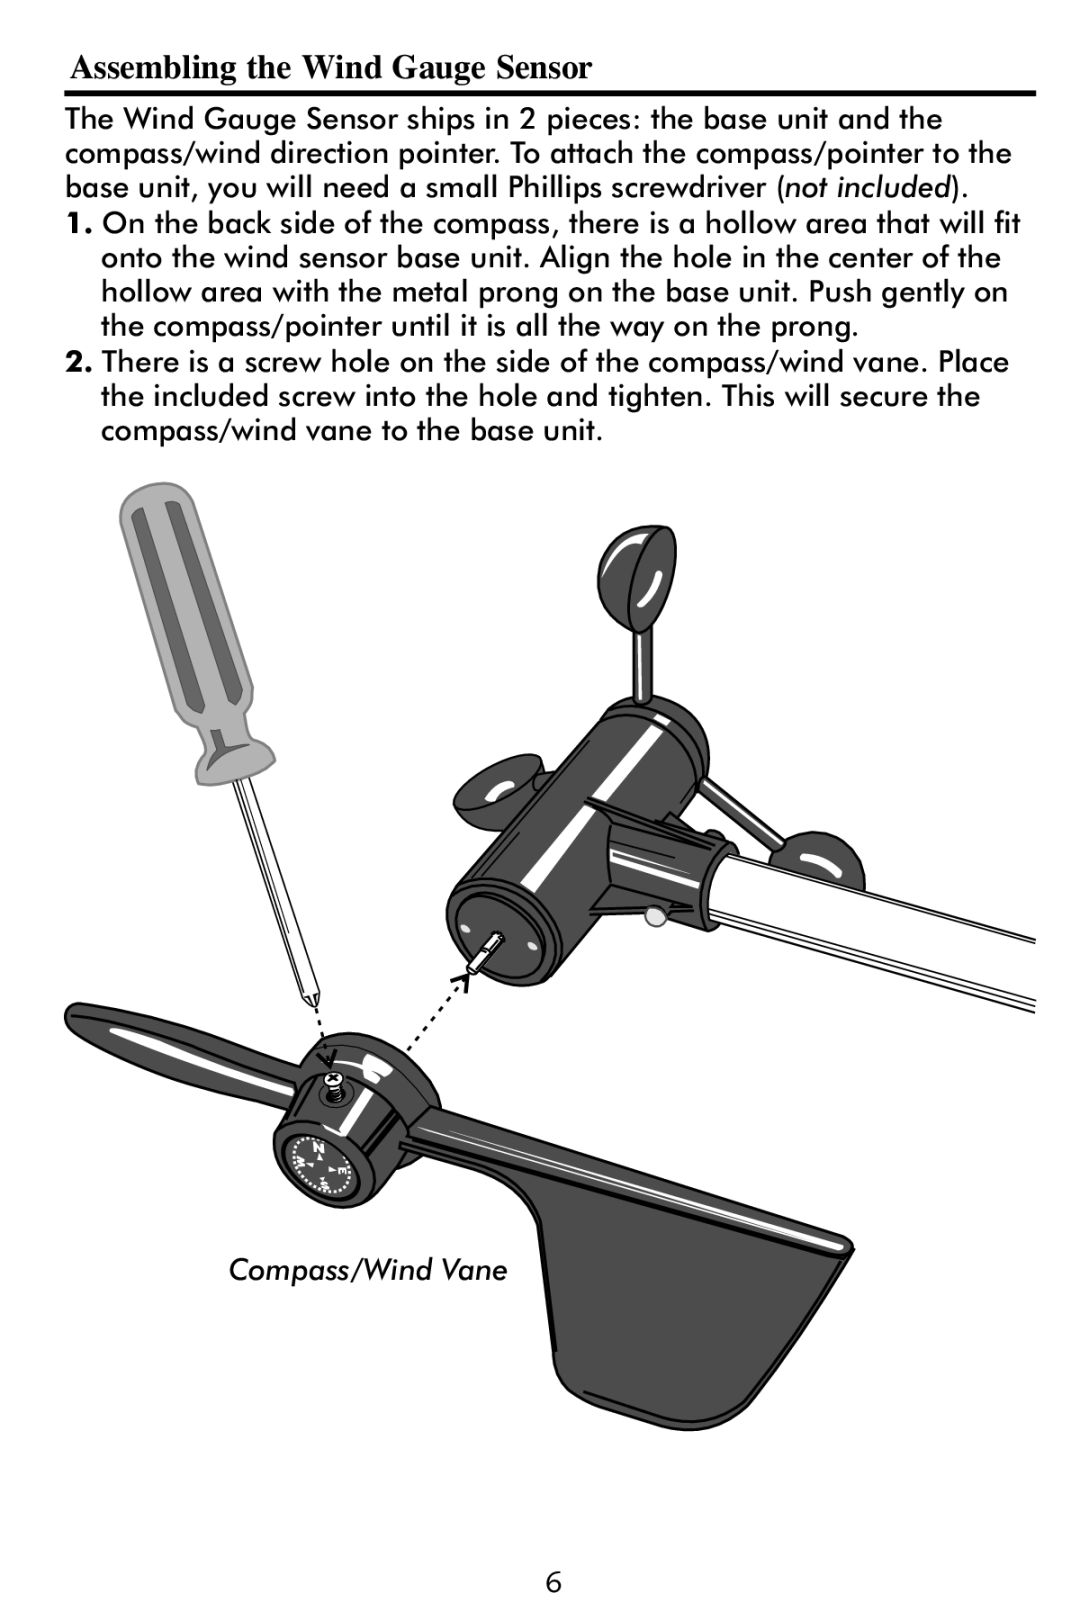 Taylor 2752 instruction manual Assembling the Wind Gauge Sensor, Compass/Wind Vane 